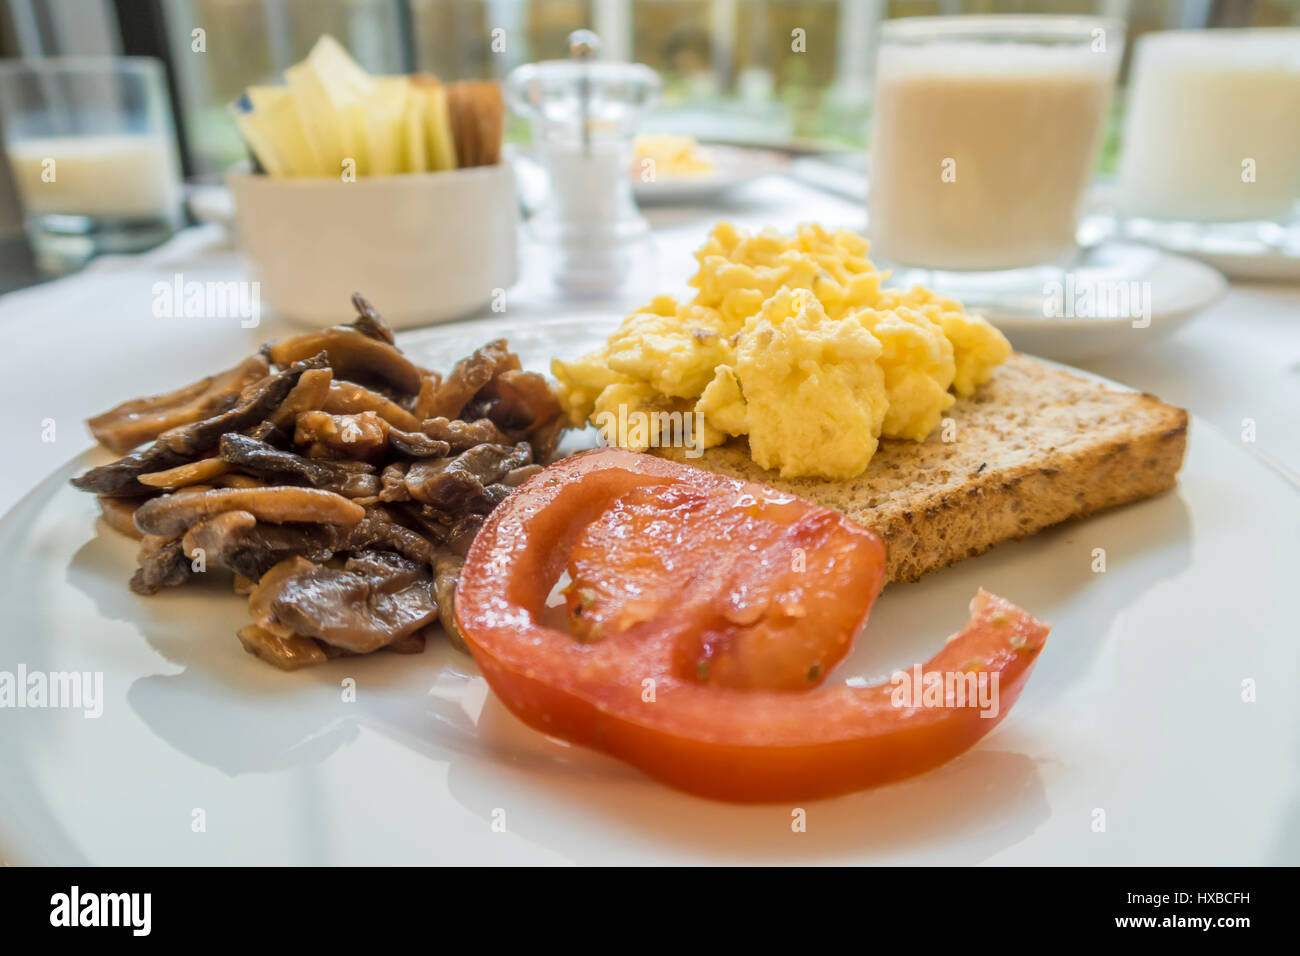 Breakfast with tomato, mushroom, scramble eggs on toast Stock Photo